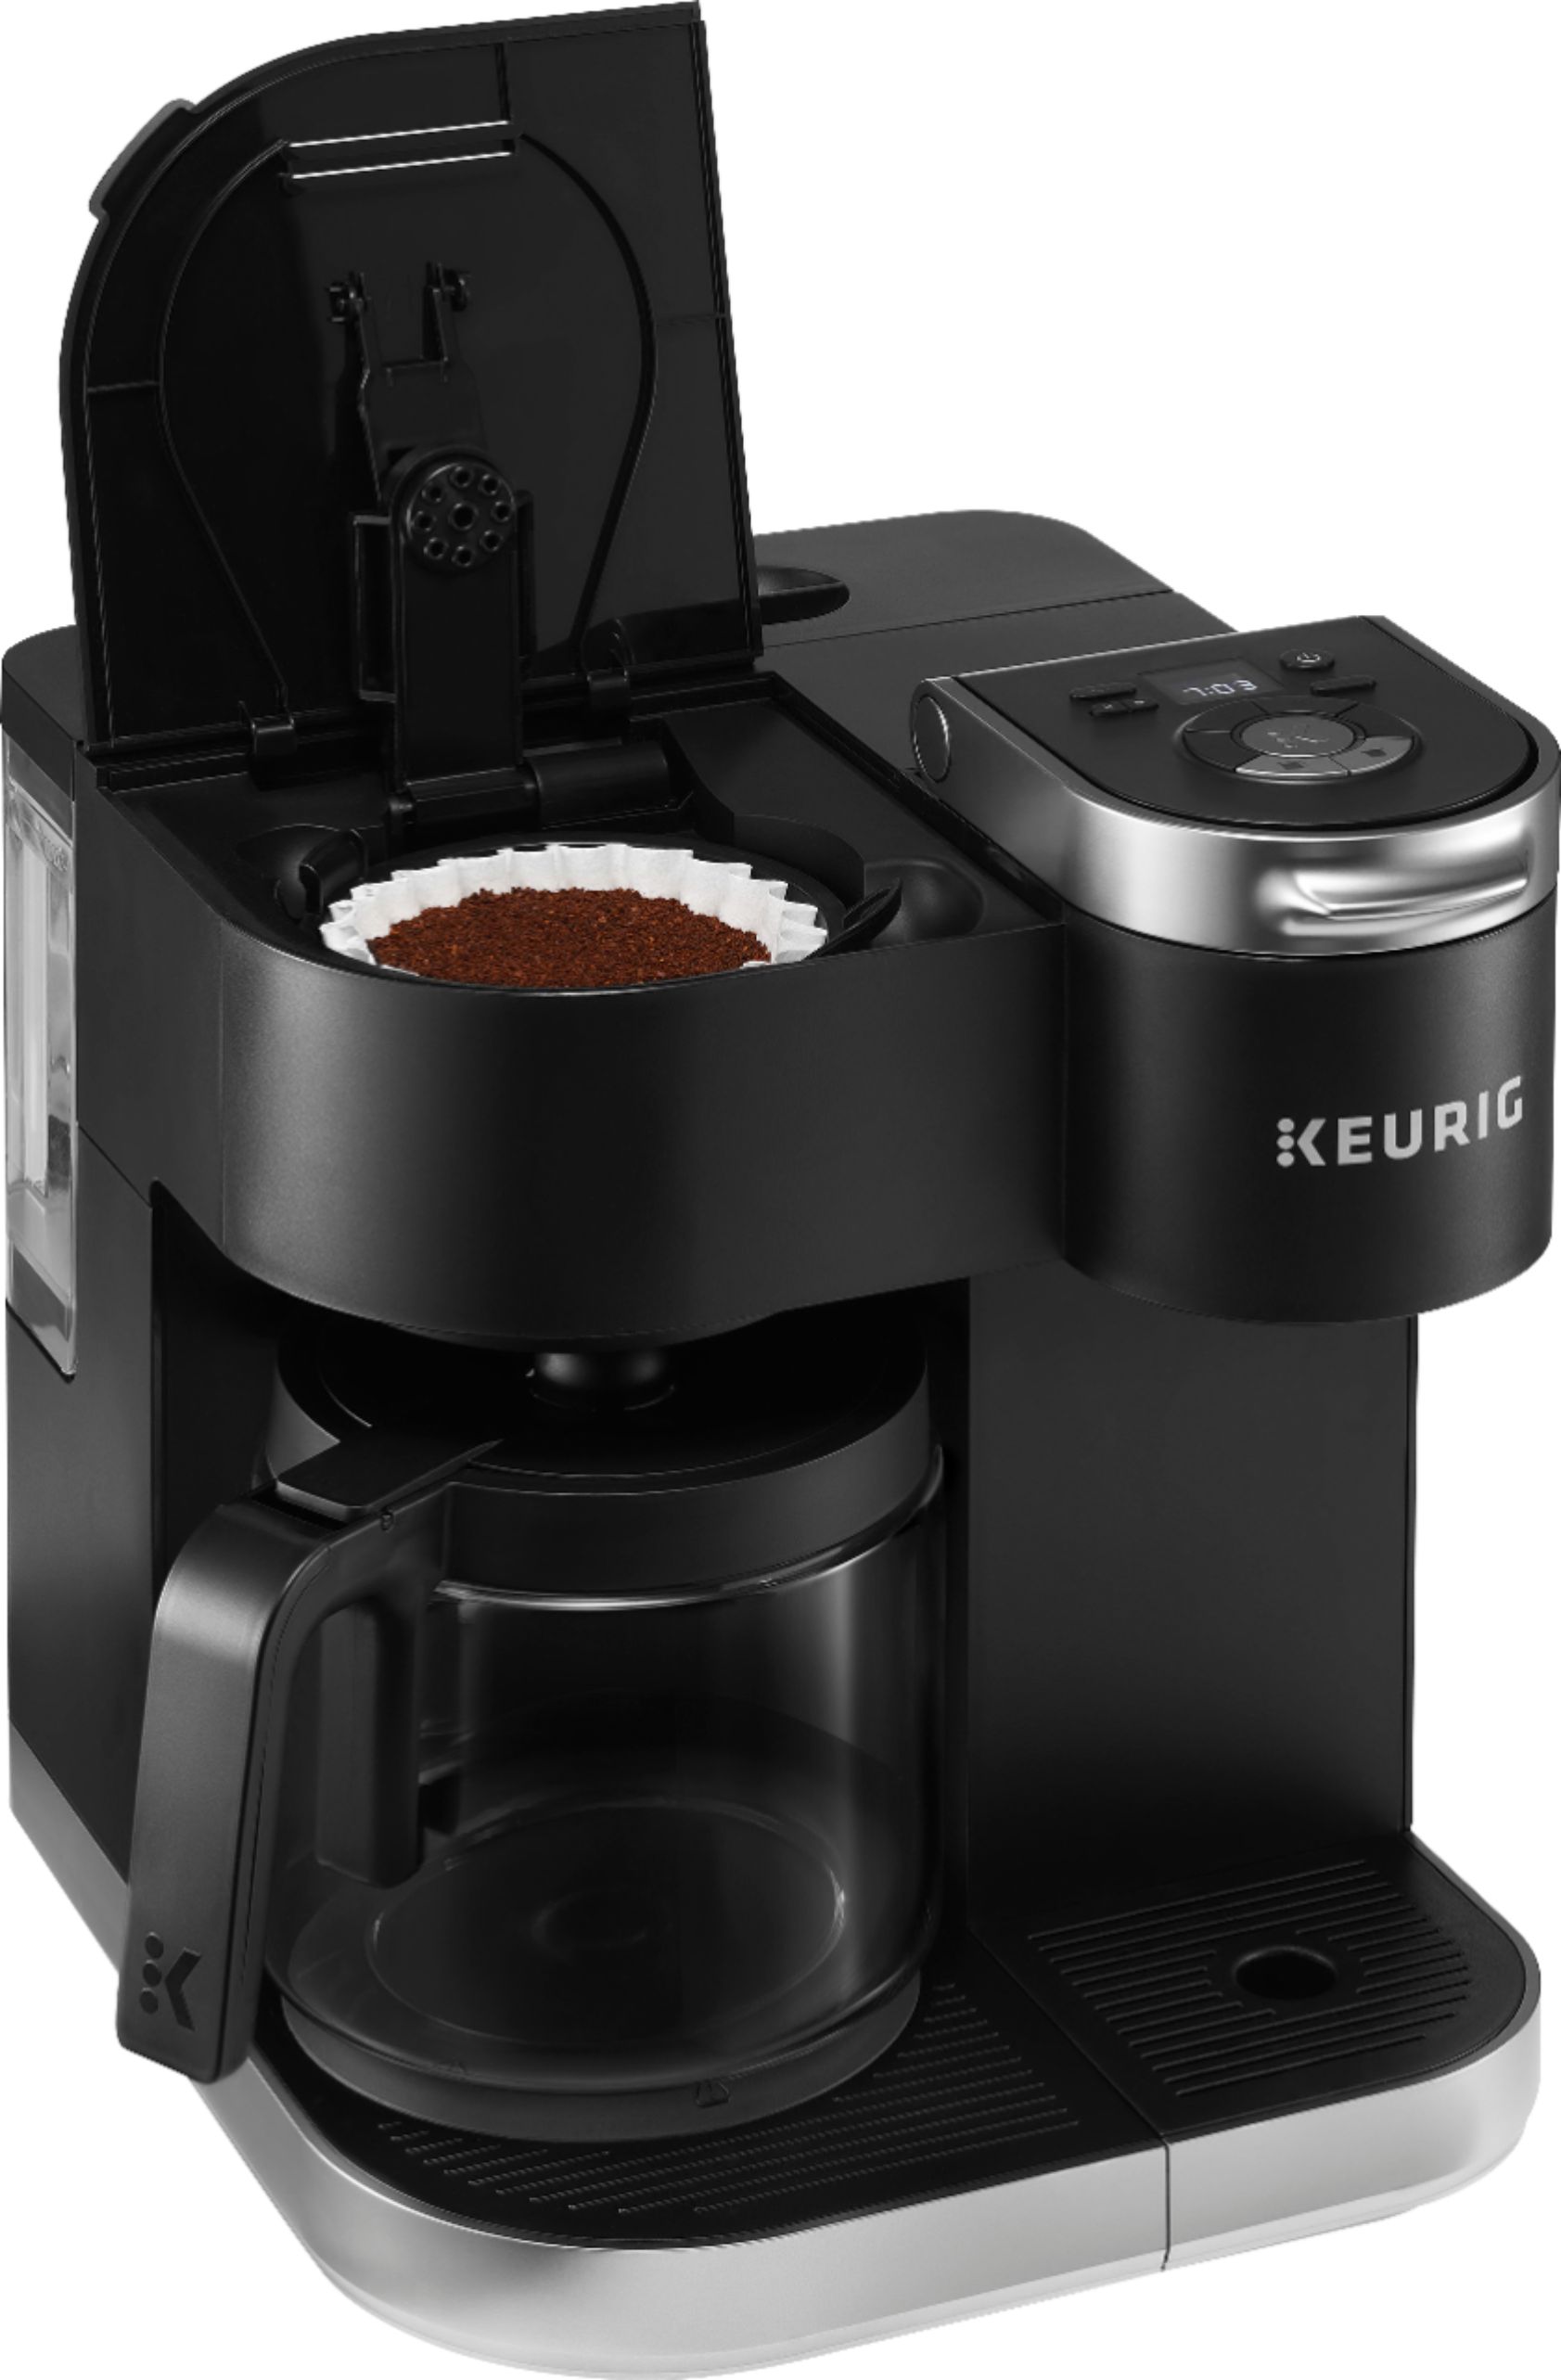 Keurig K-Duo Single Serve and Carafe Coffee Maker Black